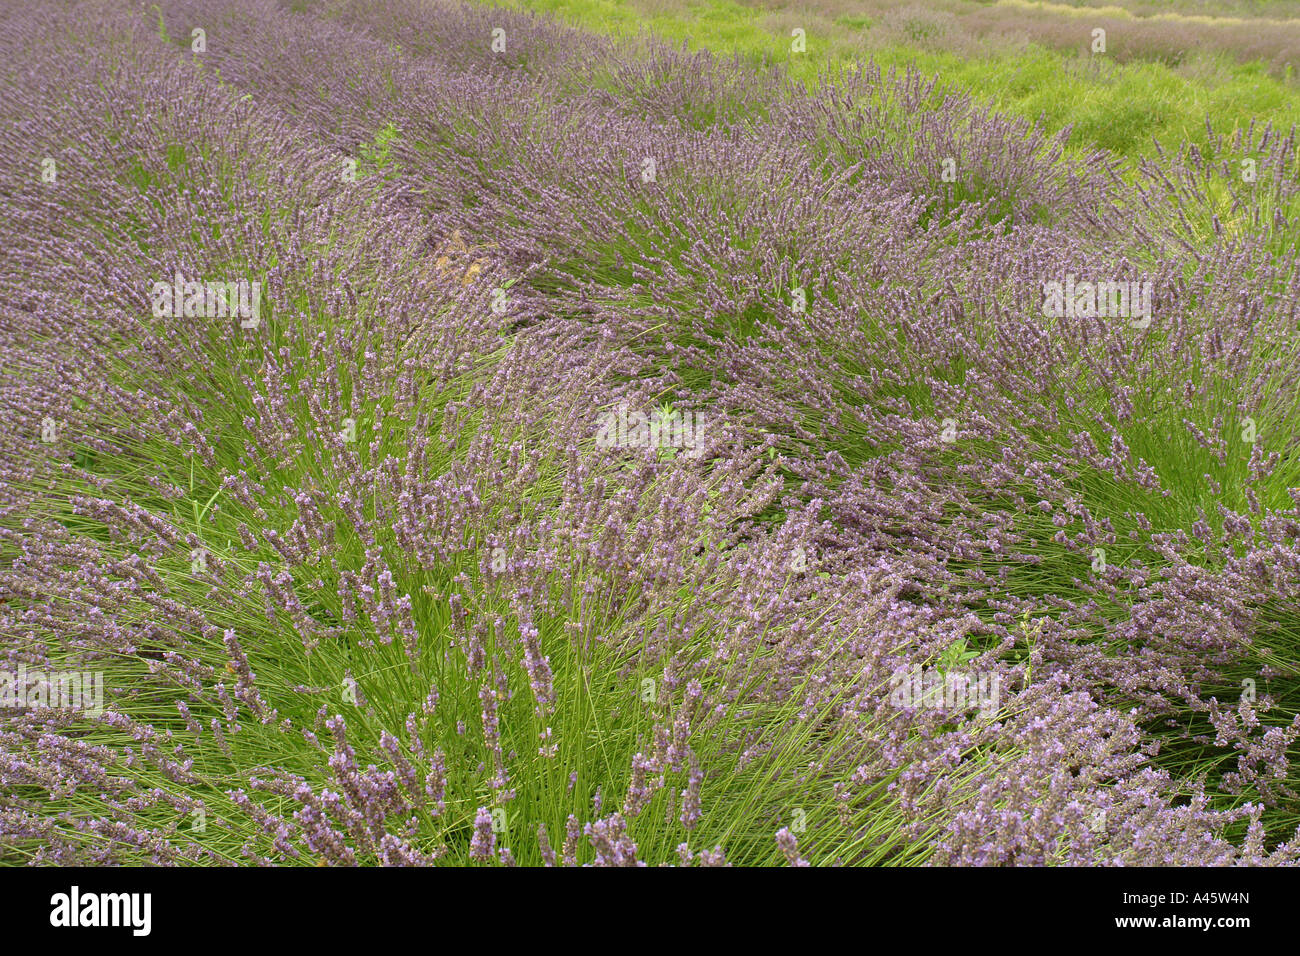 AJD55805, Oliver, Okanagan Valley, British Columbia, Canada, Lavender Farm Stock Photo